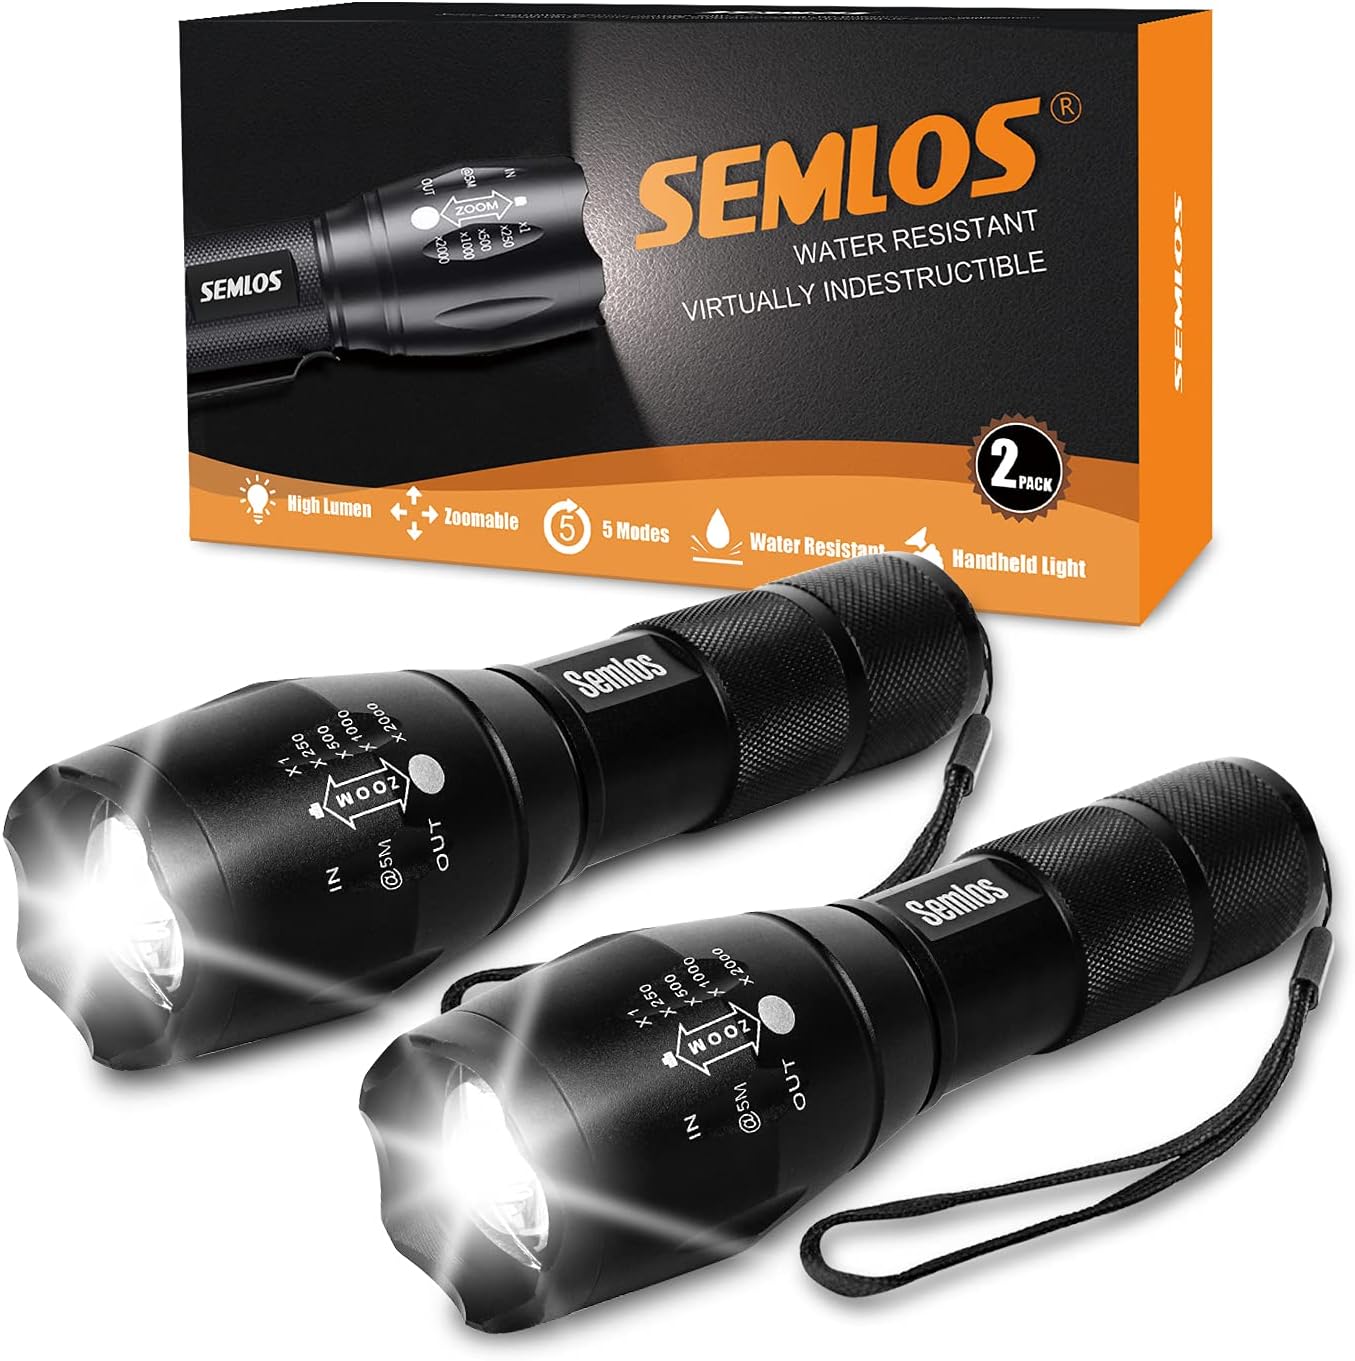 Semlos LED Flashlight Review